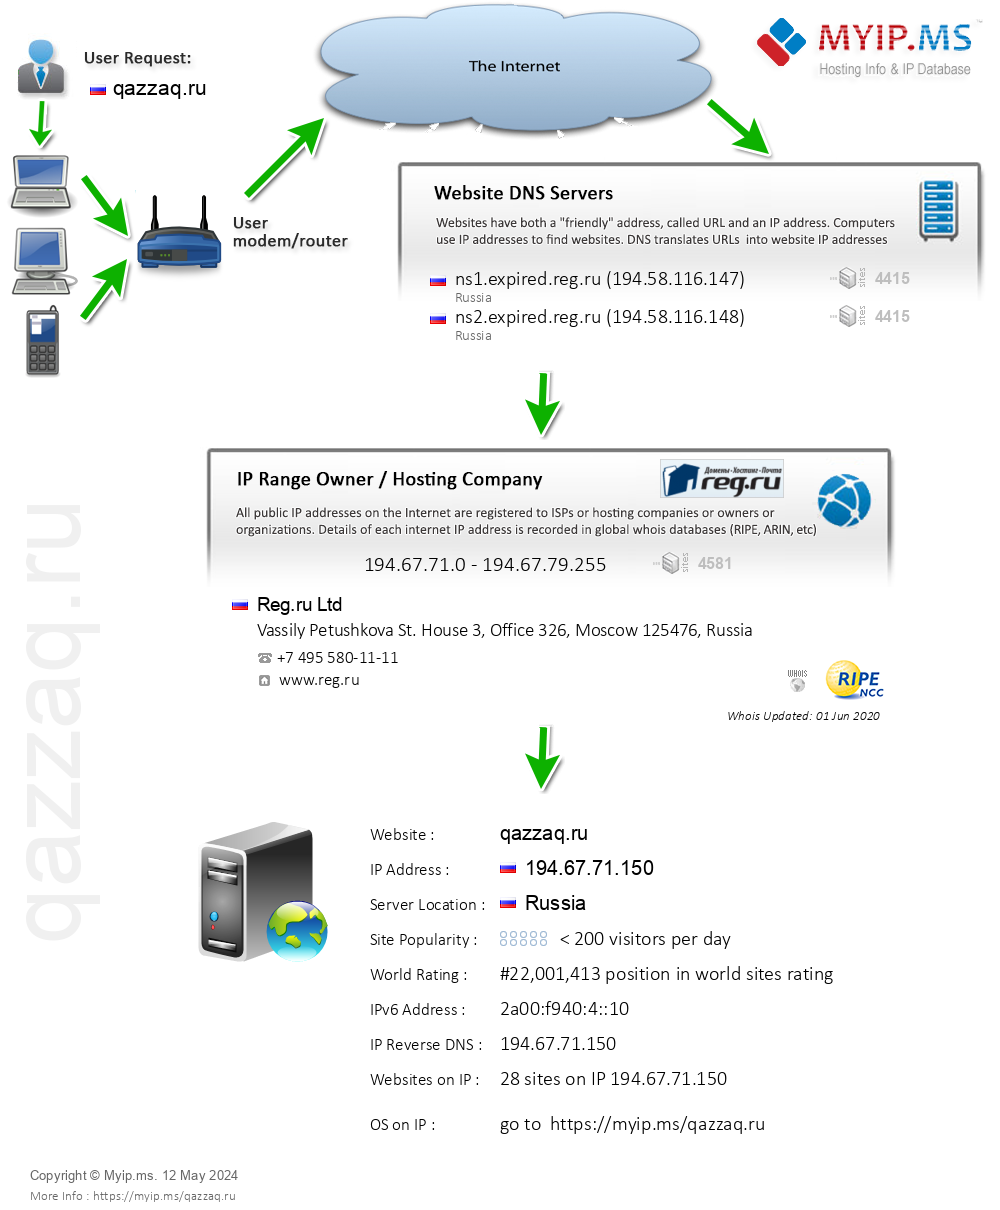 Qazzaq.ru - Website Hosting Visual IP Diagram